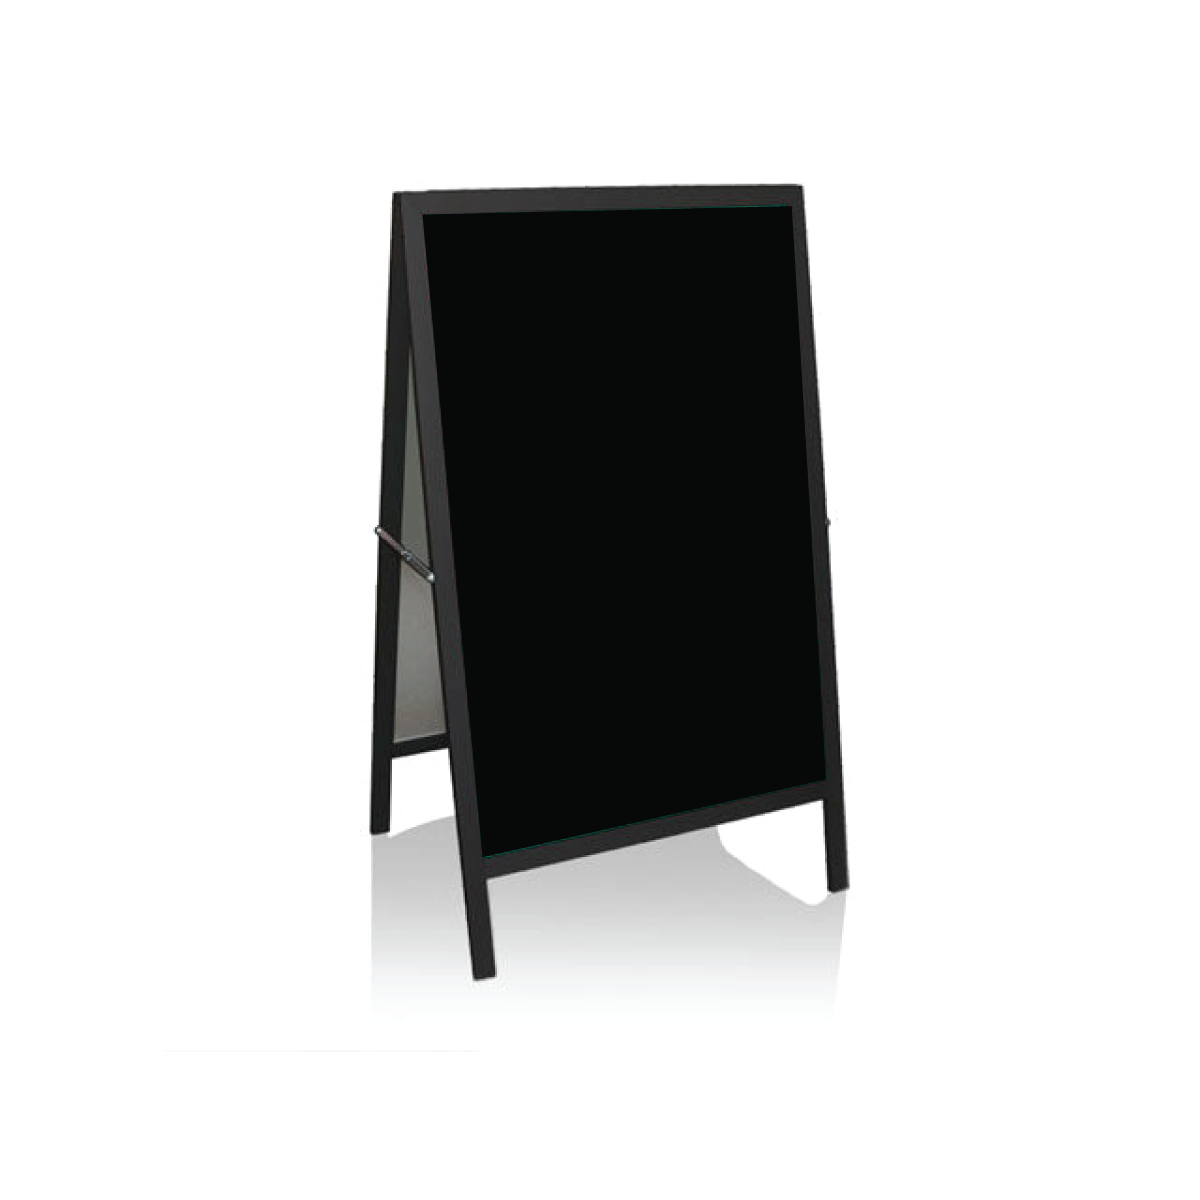 Ebony Aluminum A-Frame | Ceramic Steel Chalkboard